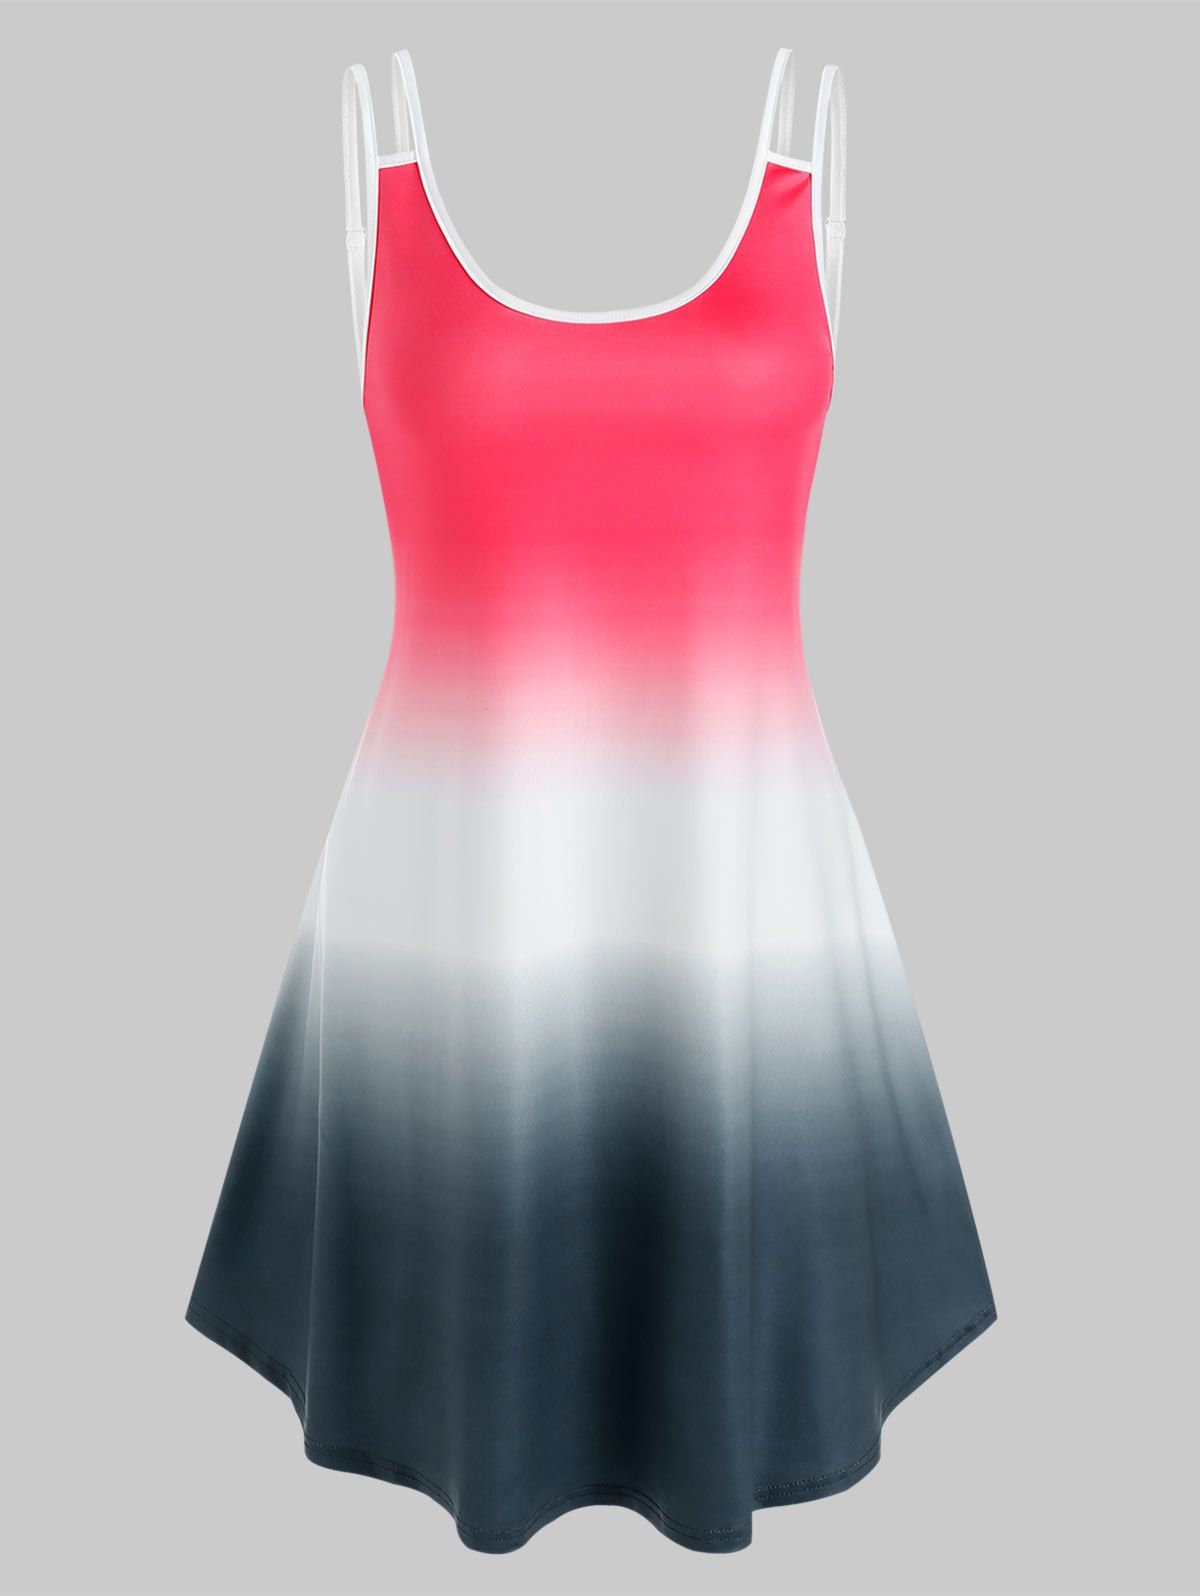 Ombre Color Sleeveless Tank Dress - multicolor L